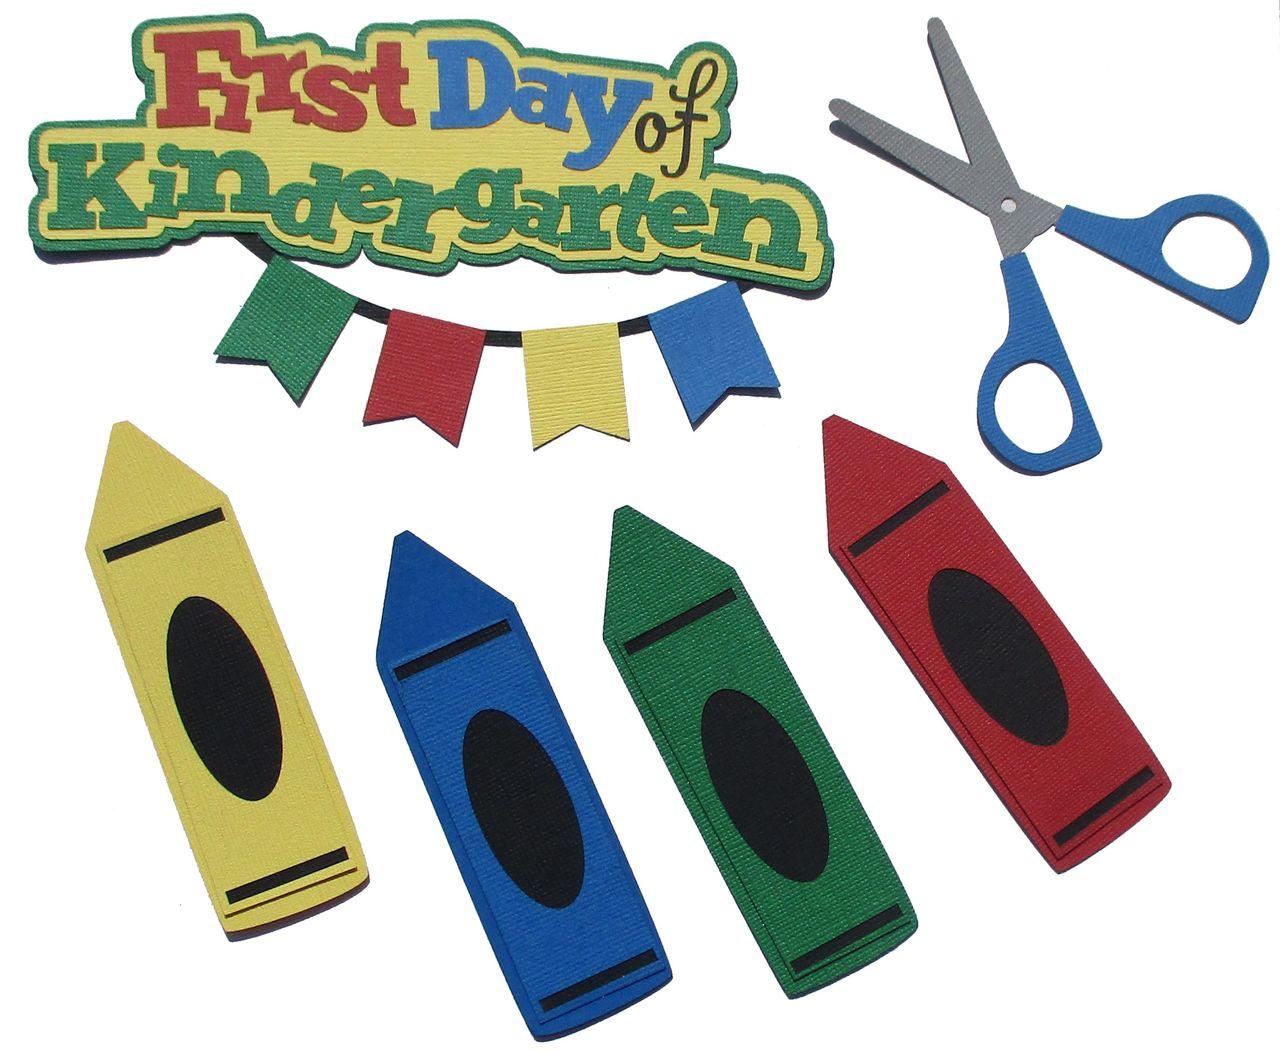 First Day of Kindergarten 2.5 x 6 Title, Crayons, Scissors 6-Piece Set Fully-Assembled Laser Cut Scrapbook Embellishment by SSC Laser Designs